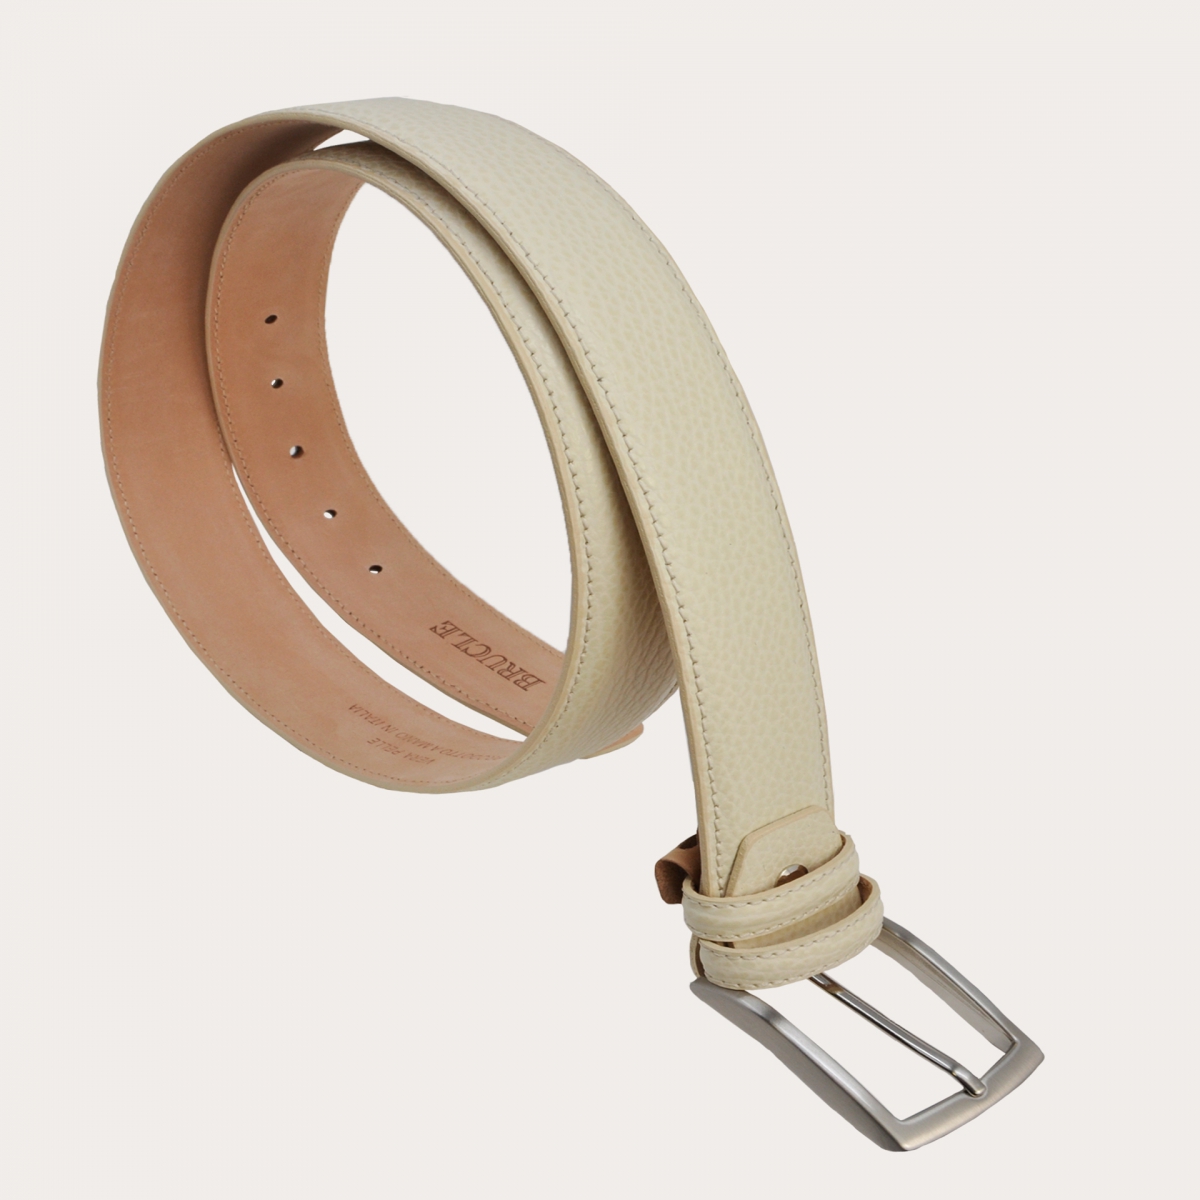 BRUCLE Cintura in vera pelle elegante e trendy, color bianco crema